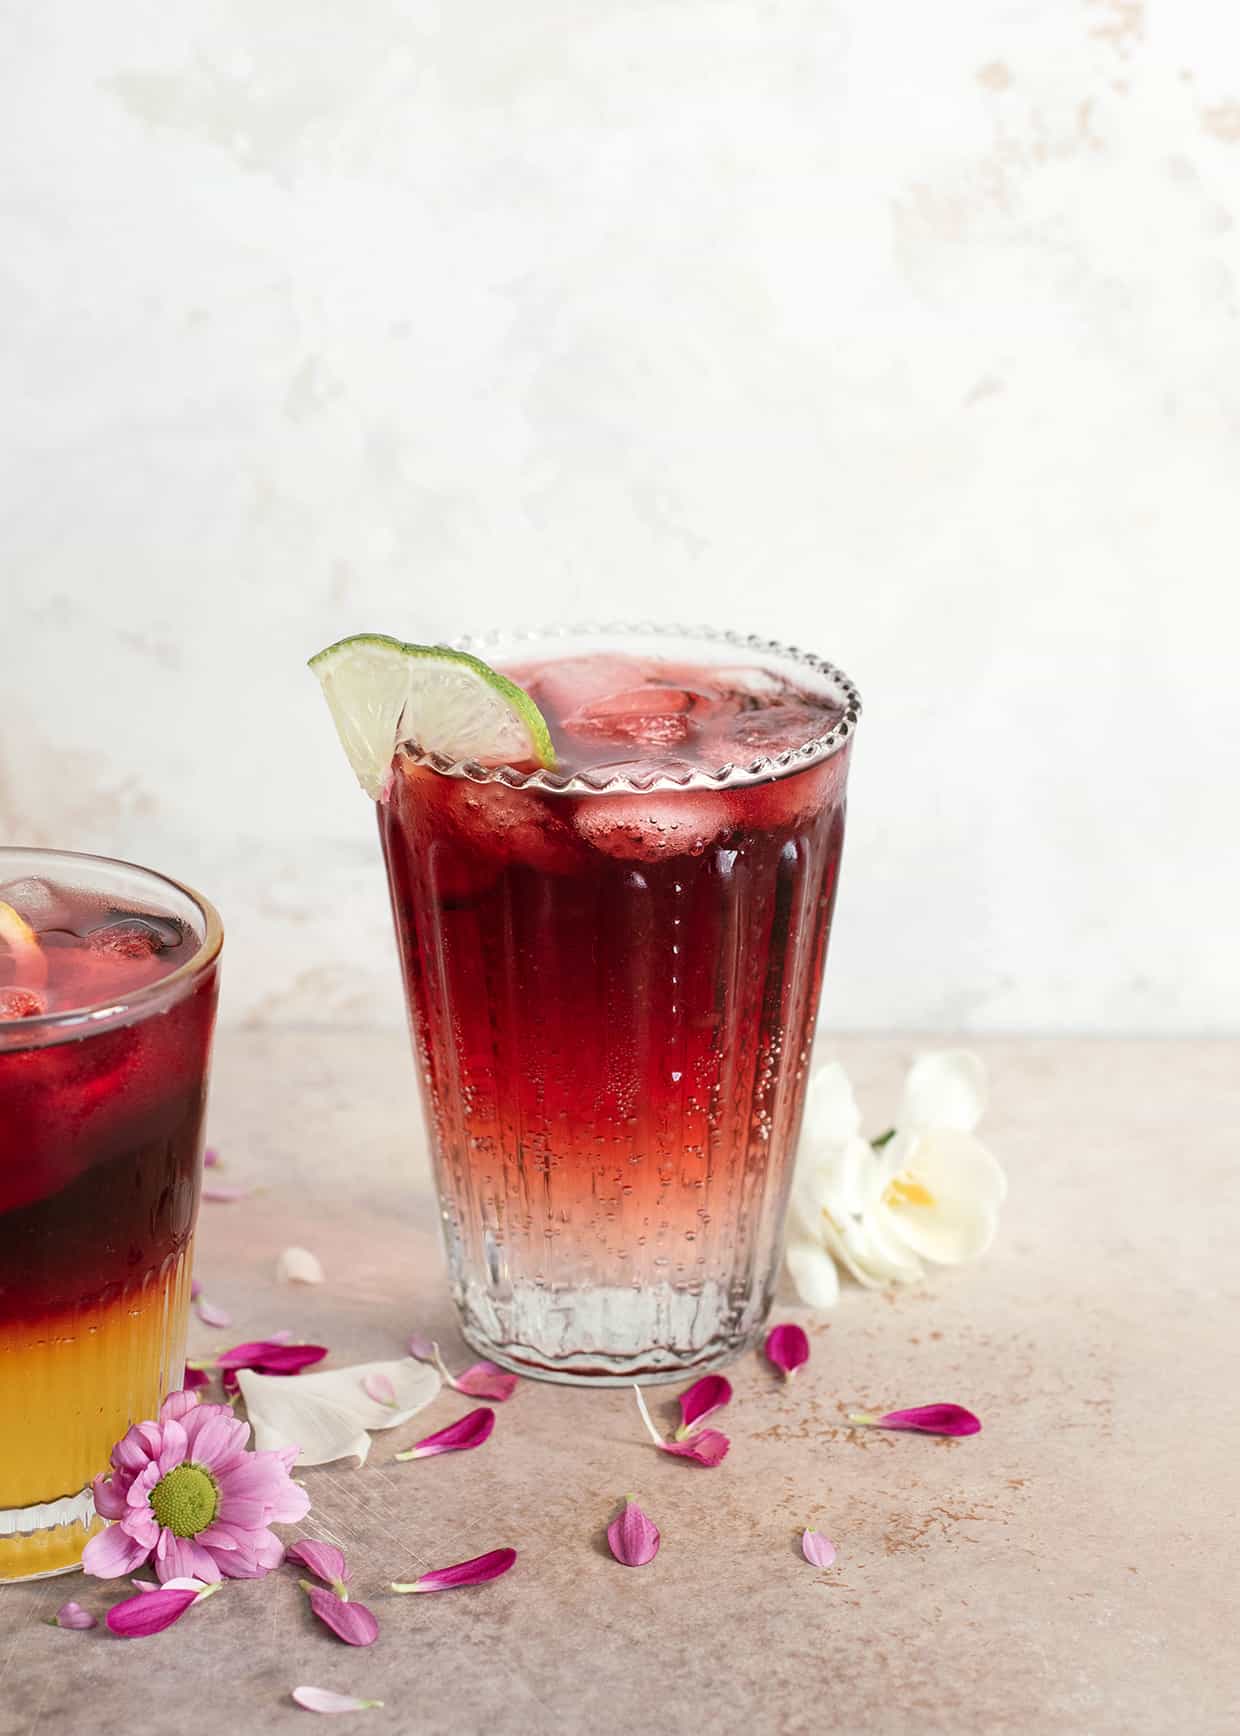 red wine spritzer cocktails served in glasses